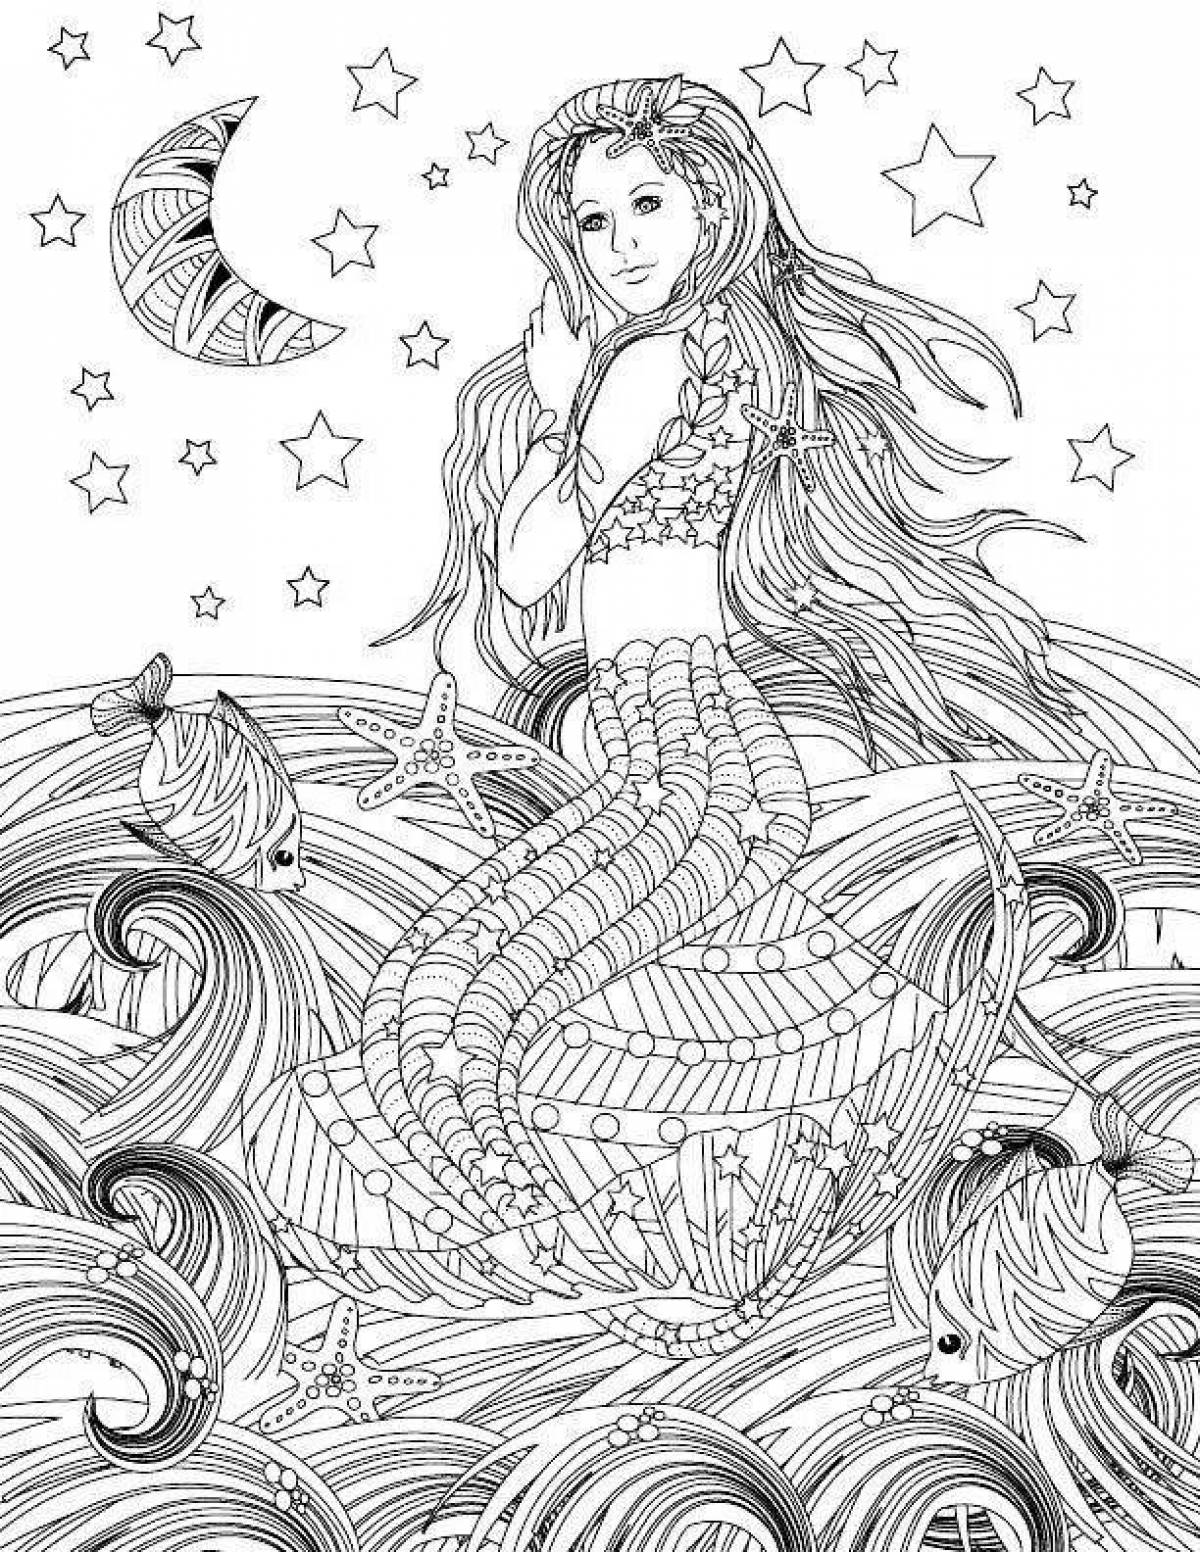 Great coloring antistress mermaid